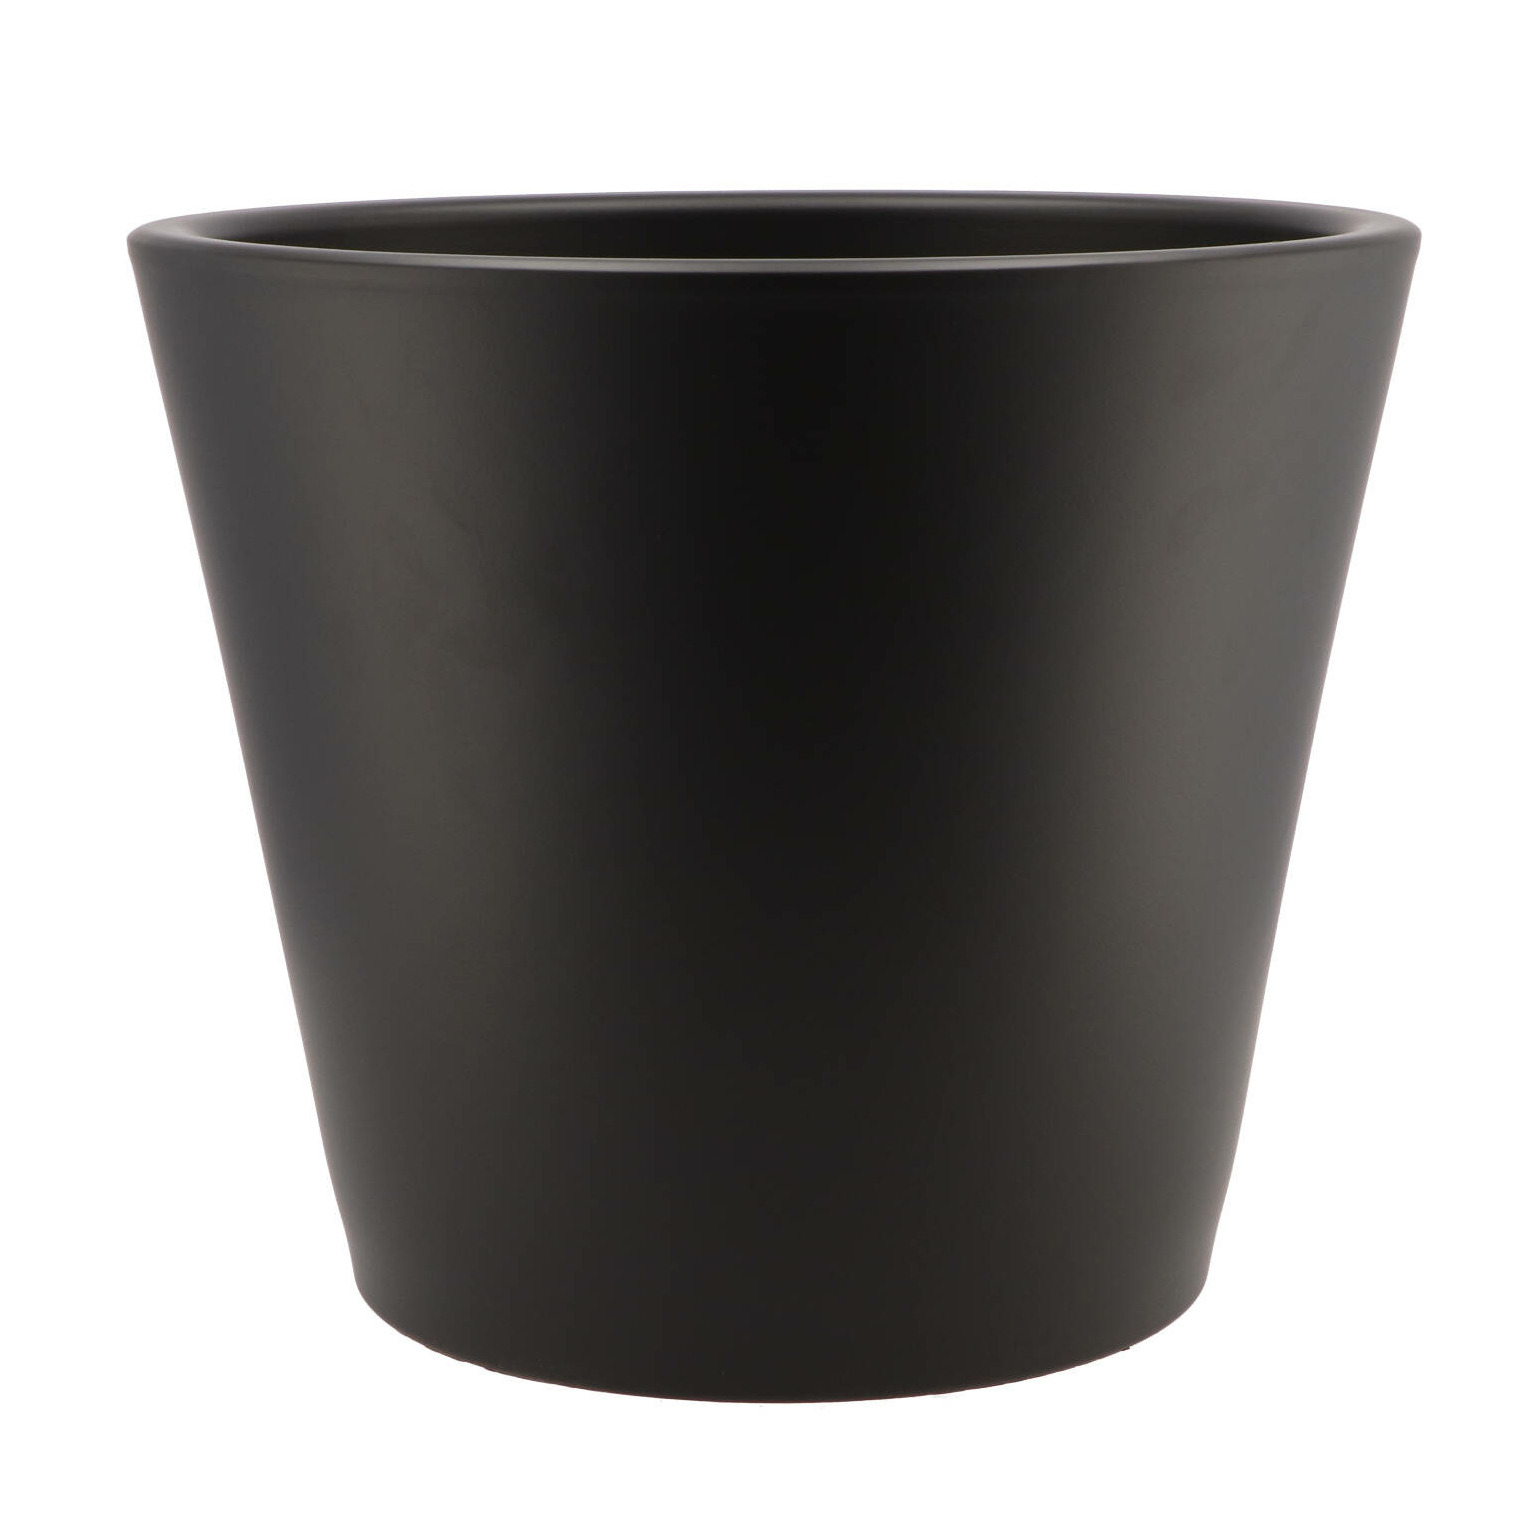 DK Design  bloempot/plantenpot - Vinci - zwart mat - voor kamerplant - D28 x H34 cm -